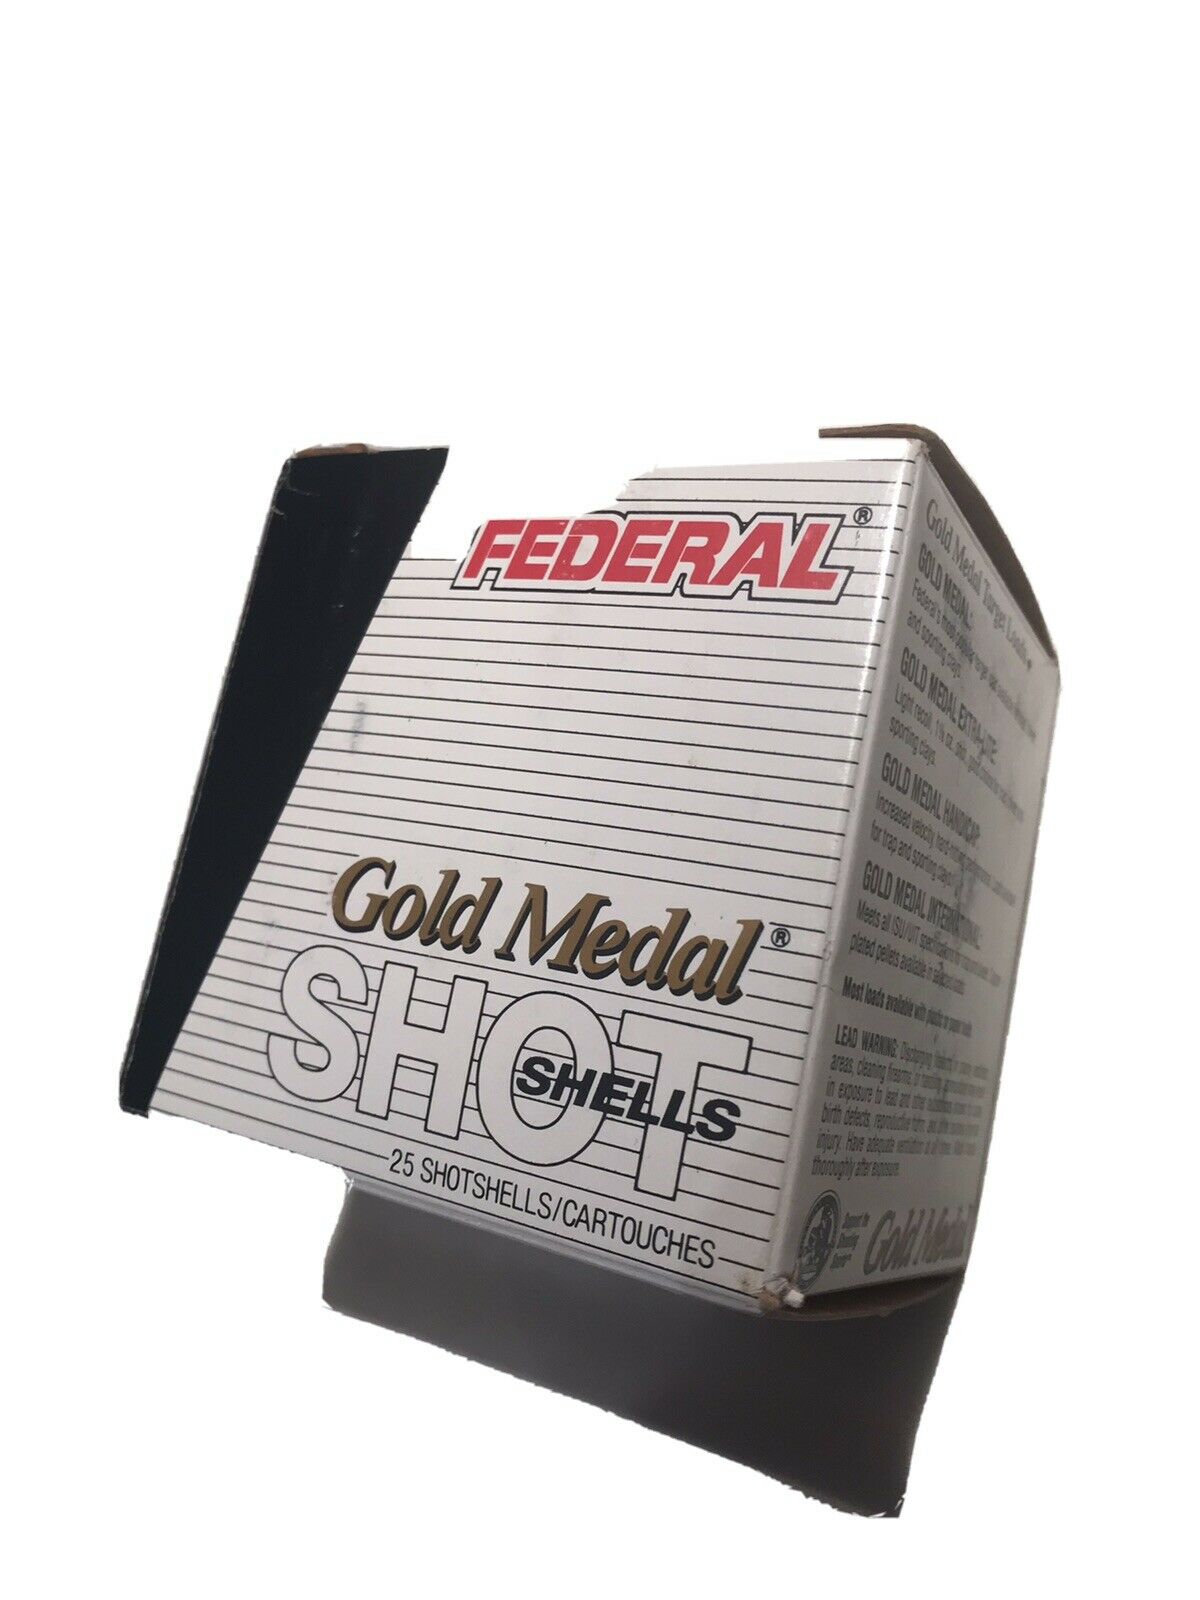 28 Gauge Federal Gold Medal Shotgun Shells Box Empty Shotgun Shell Box